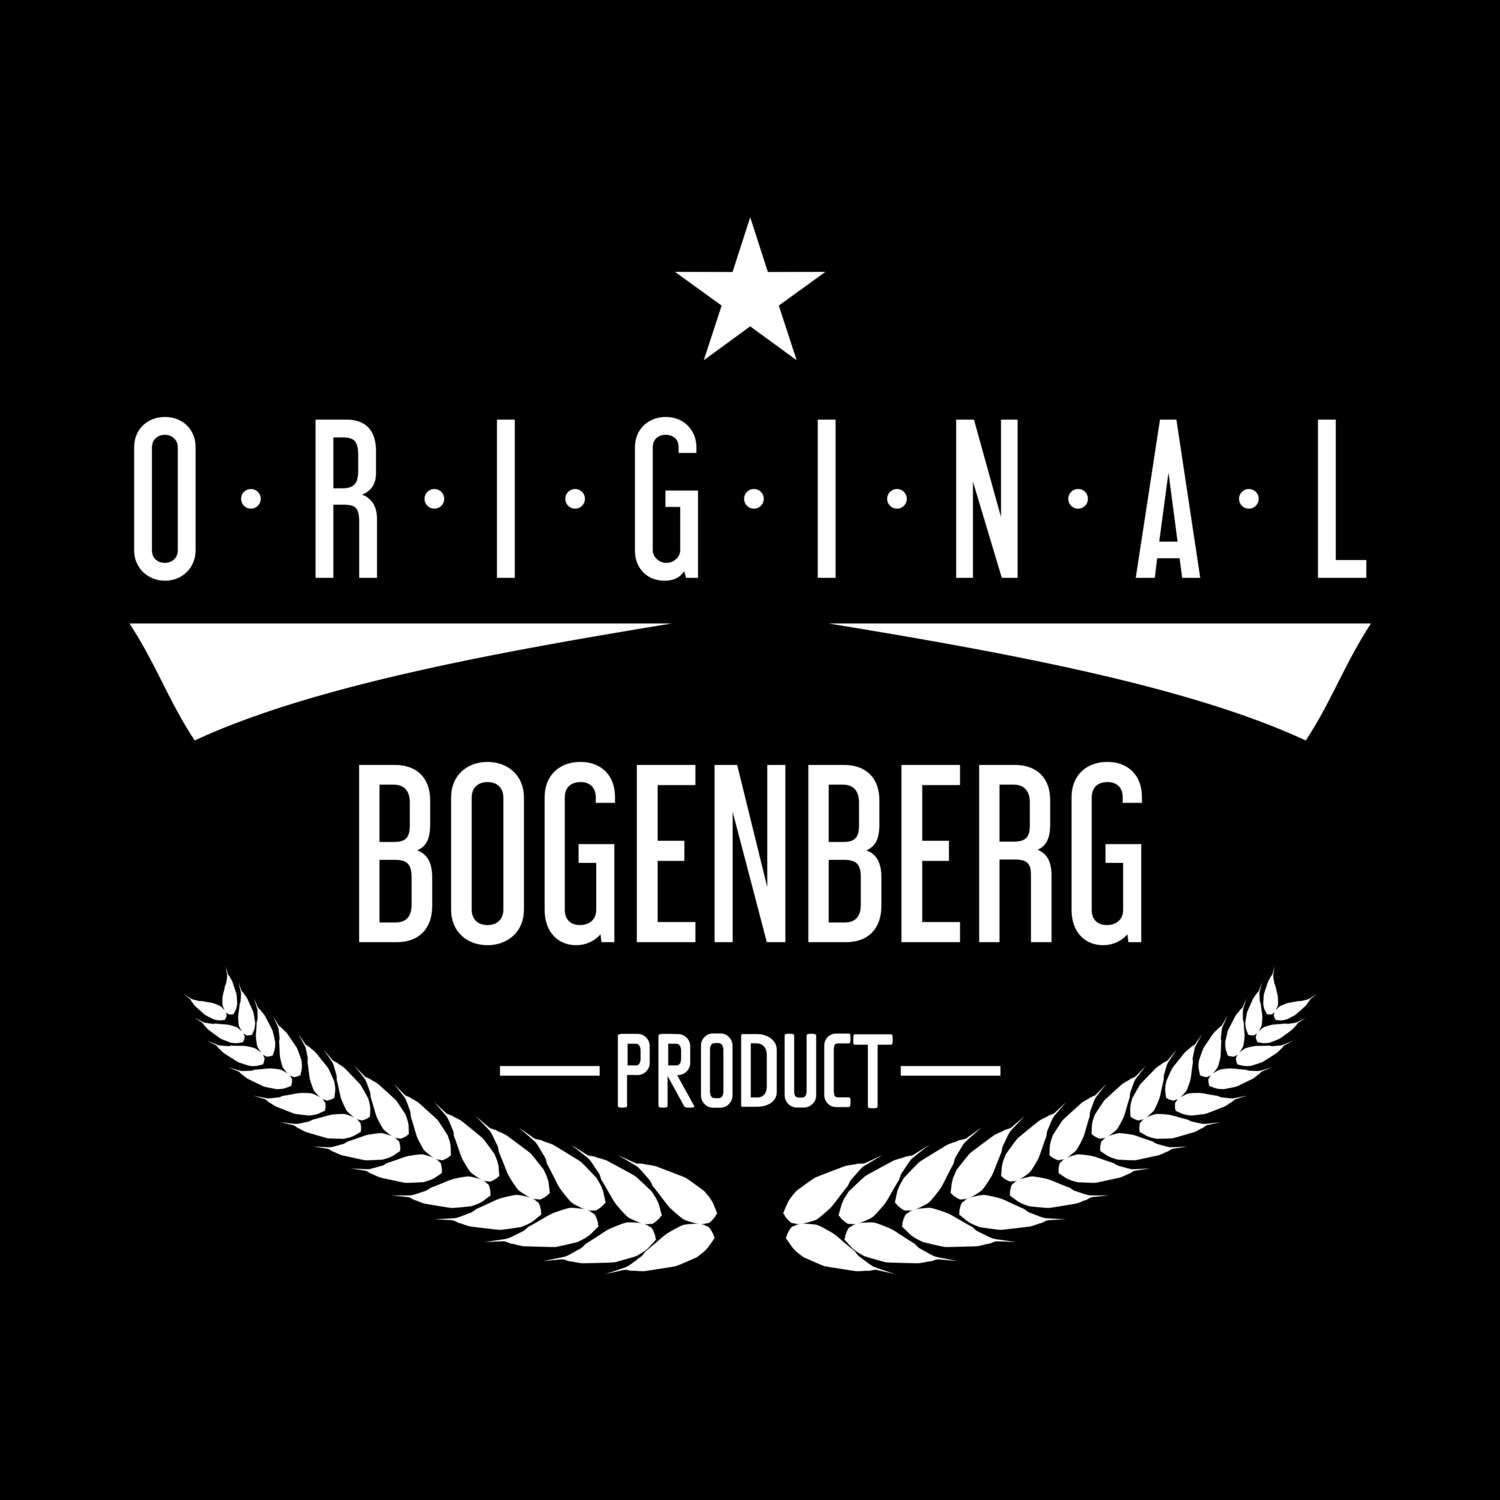 Bogenberg T-Shirt »Original Product«